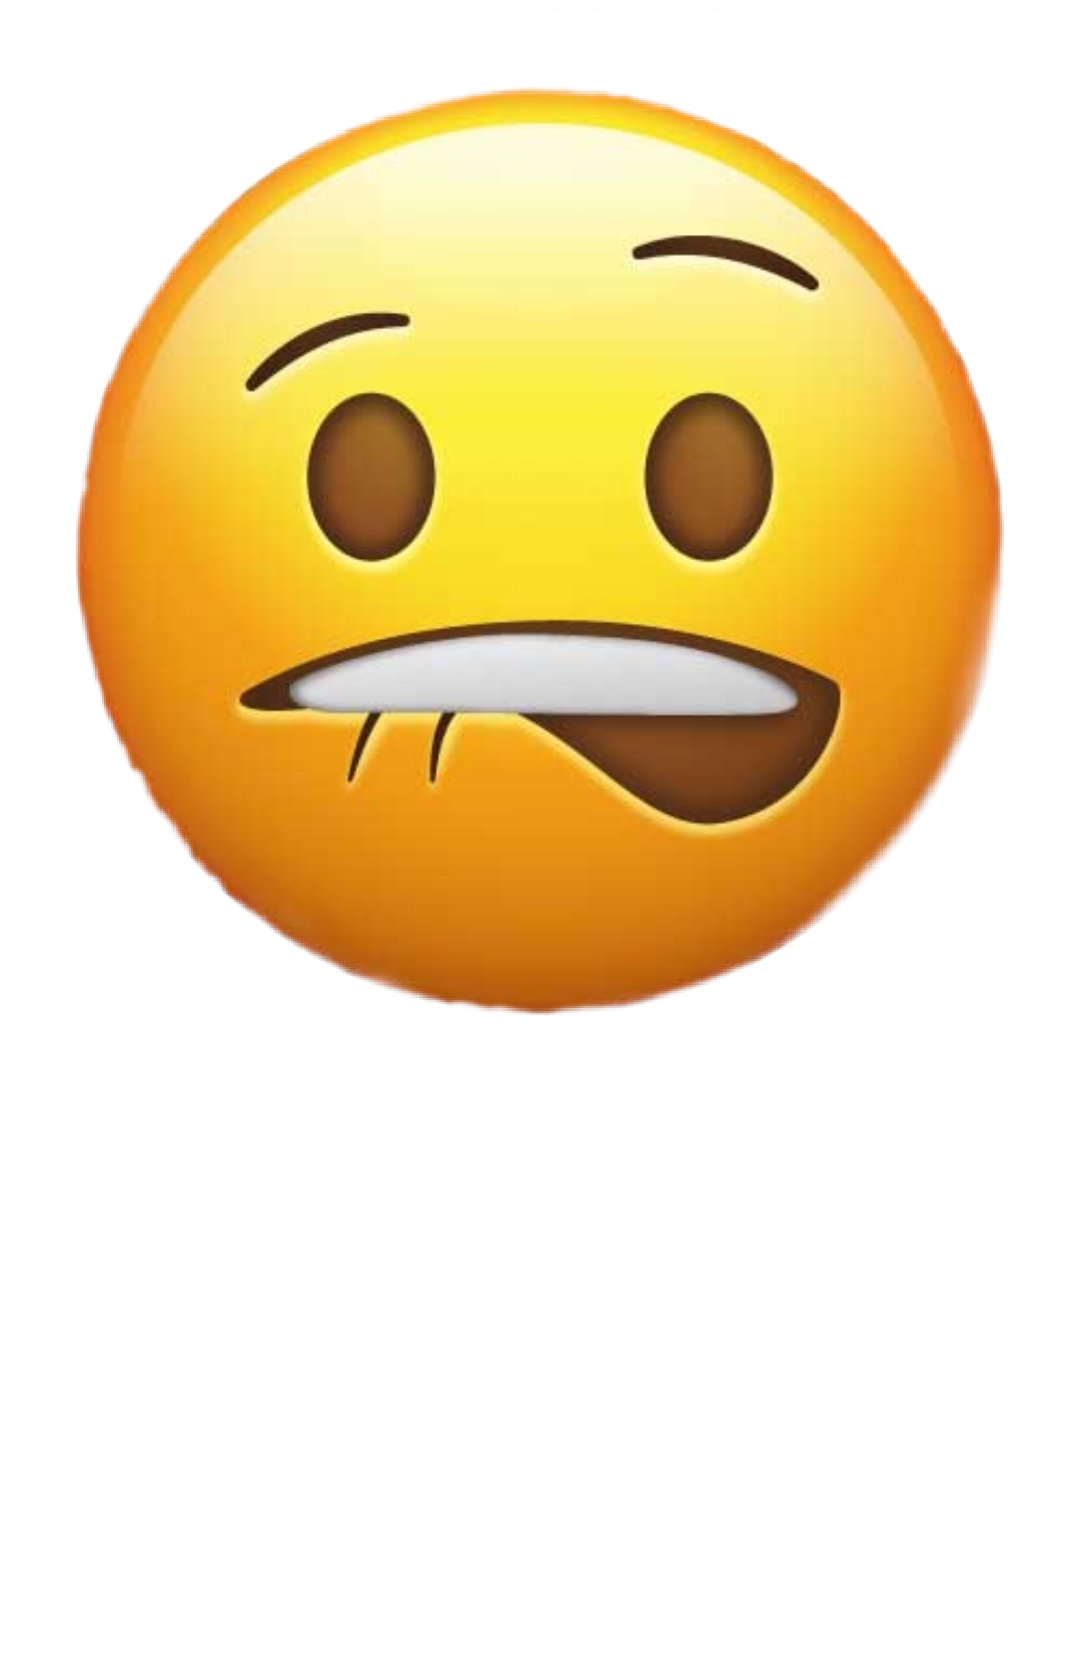 Lip Bite Emoji PNG Transparent